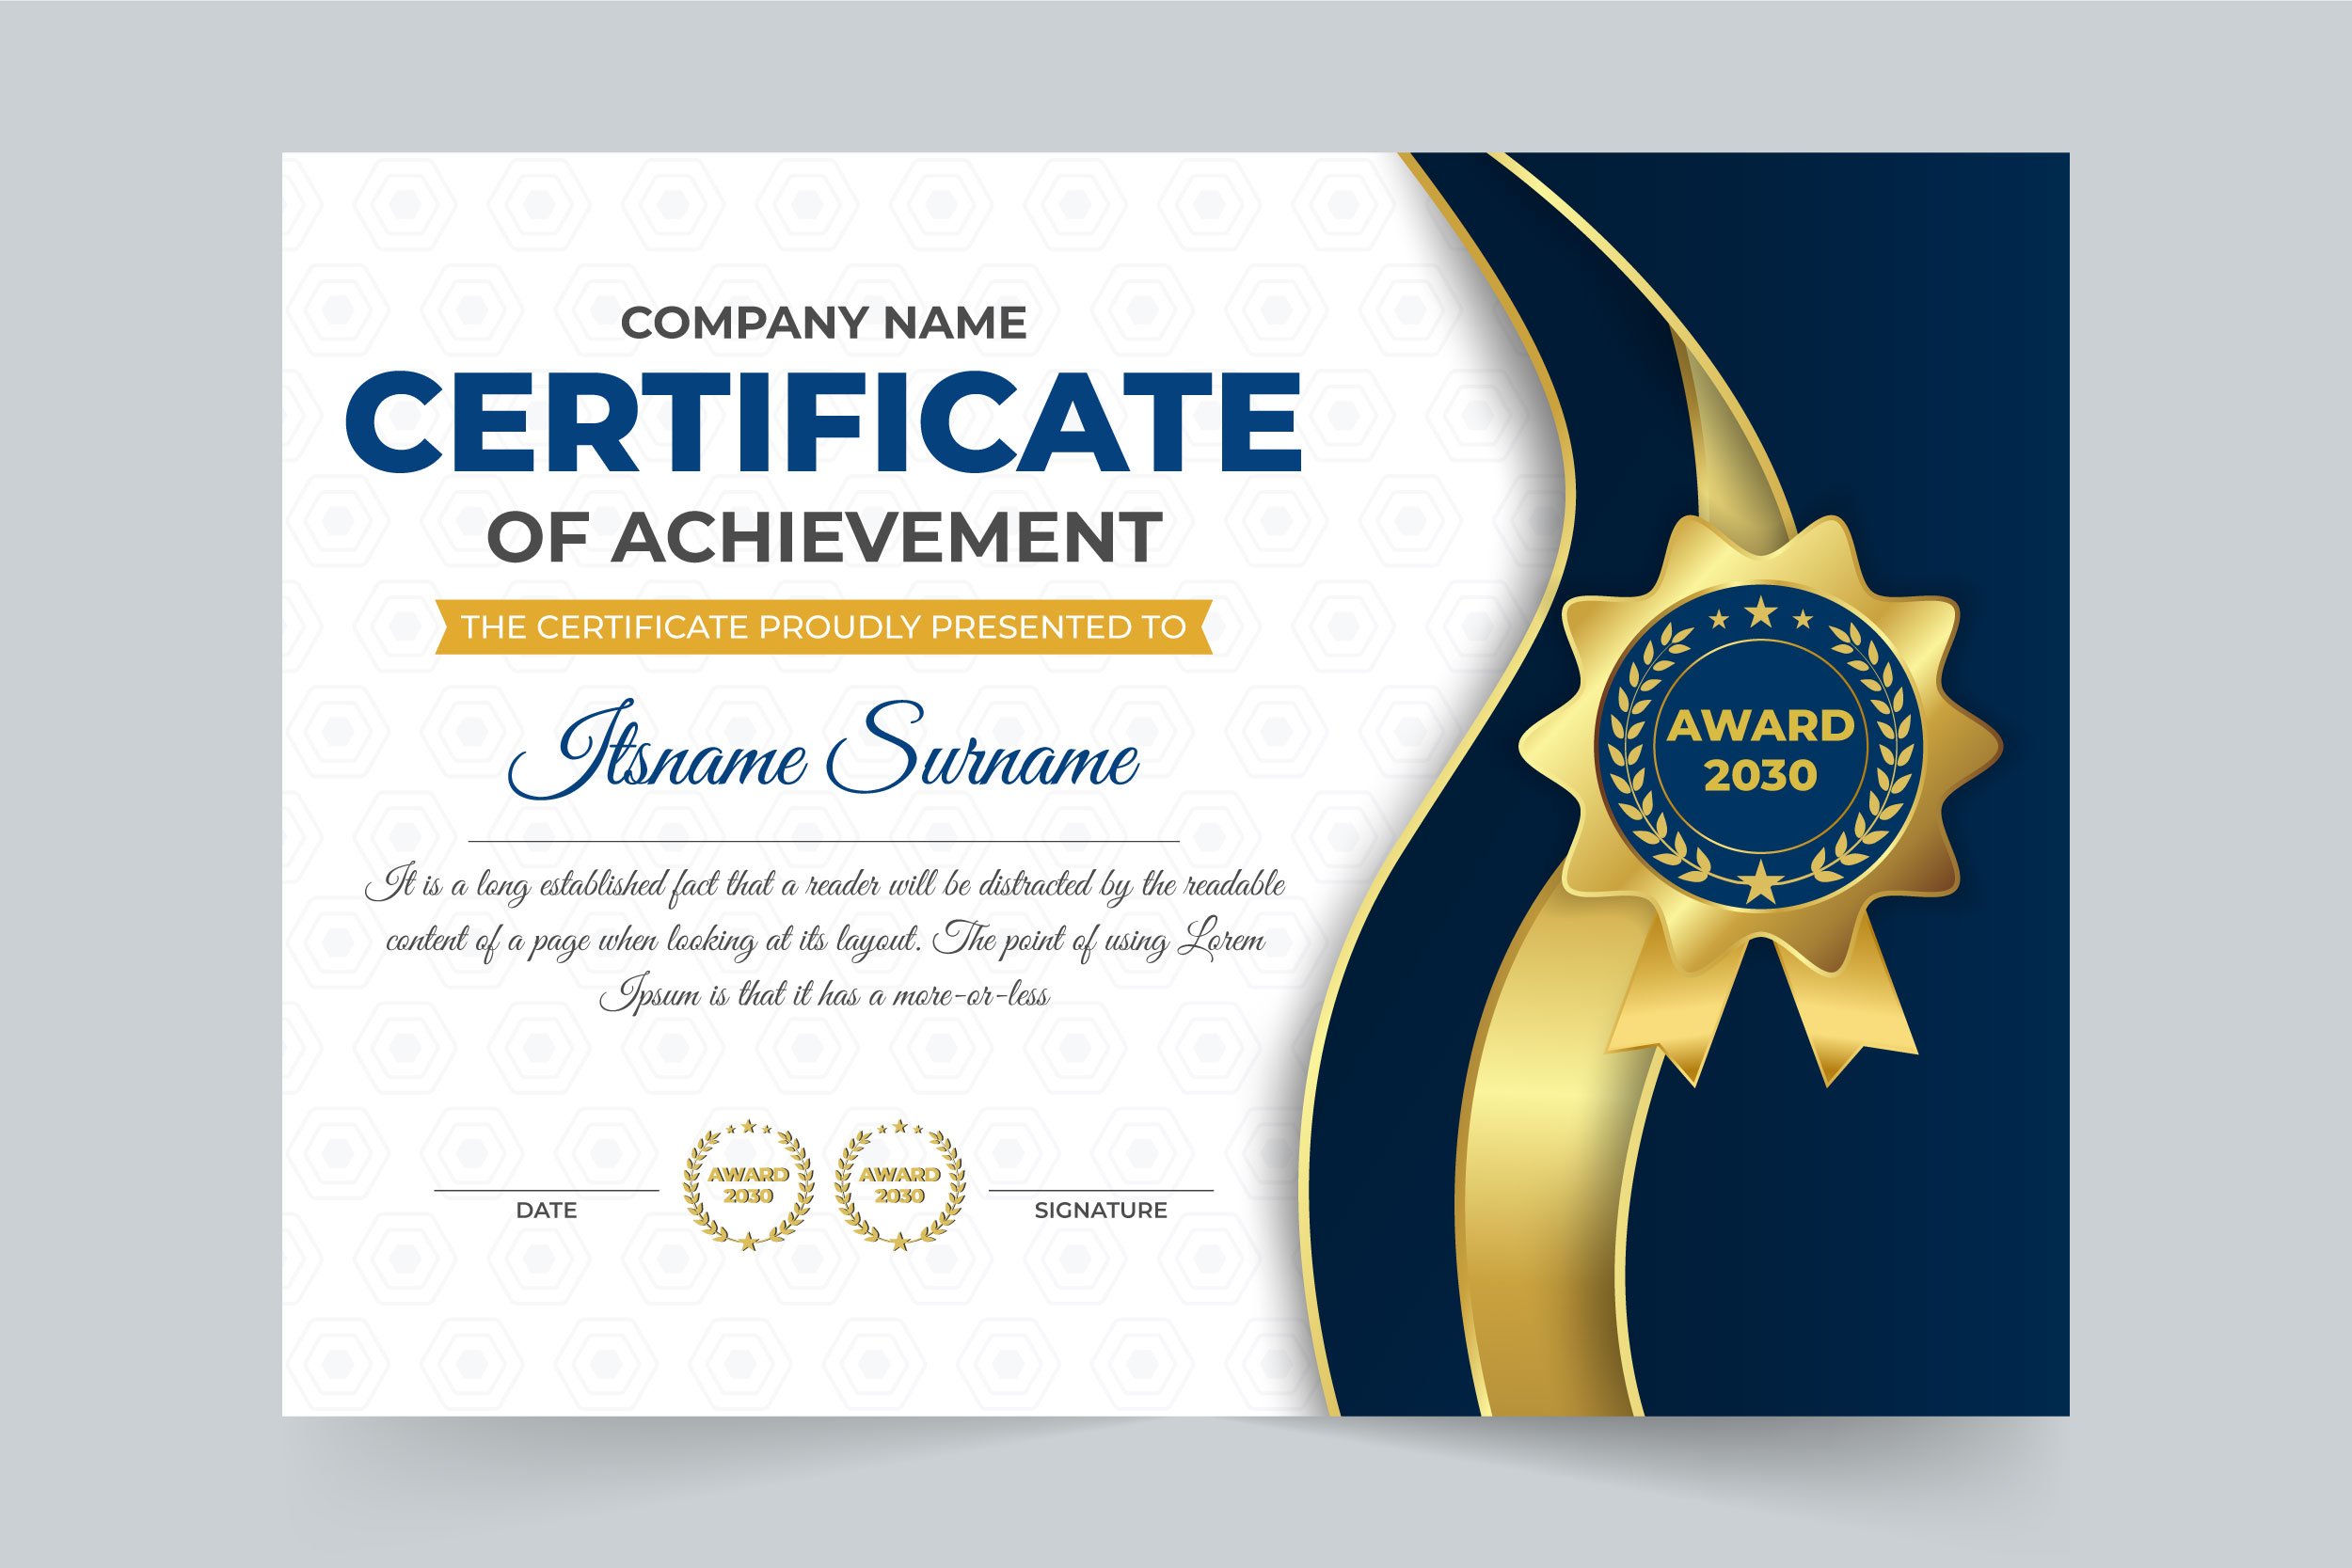 Educational diploma certificate cover image.